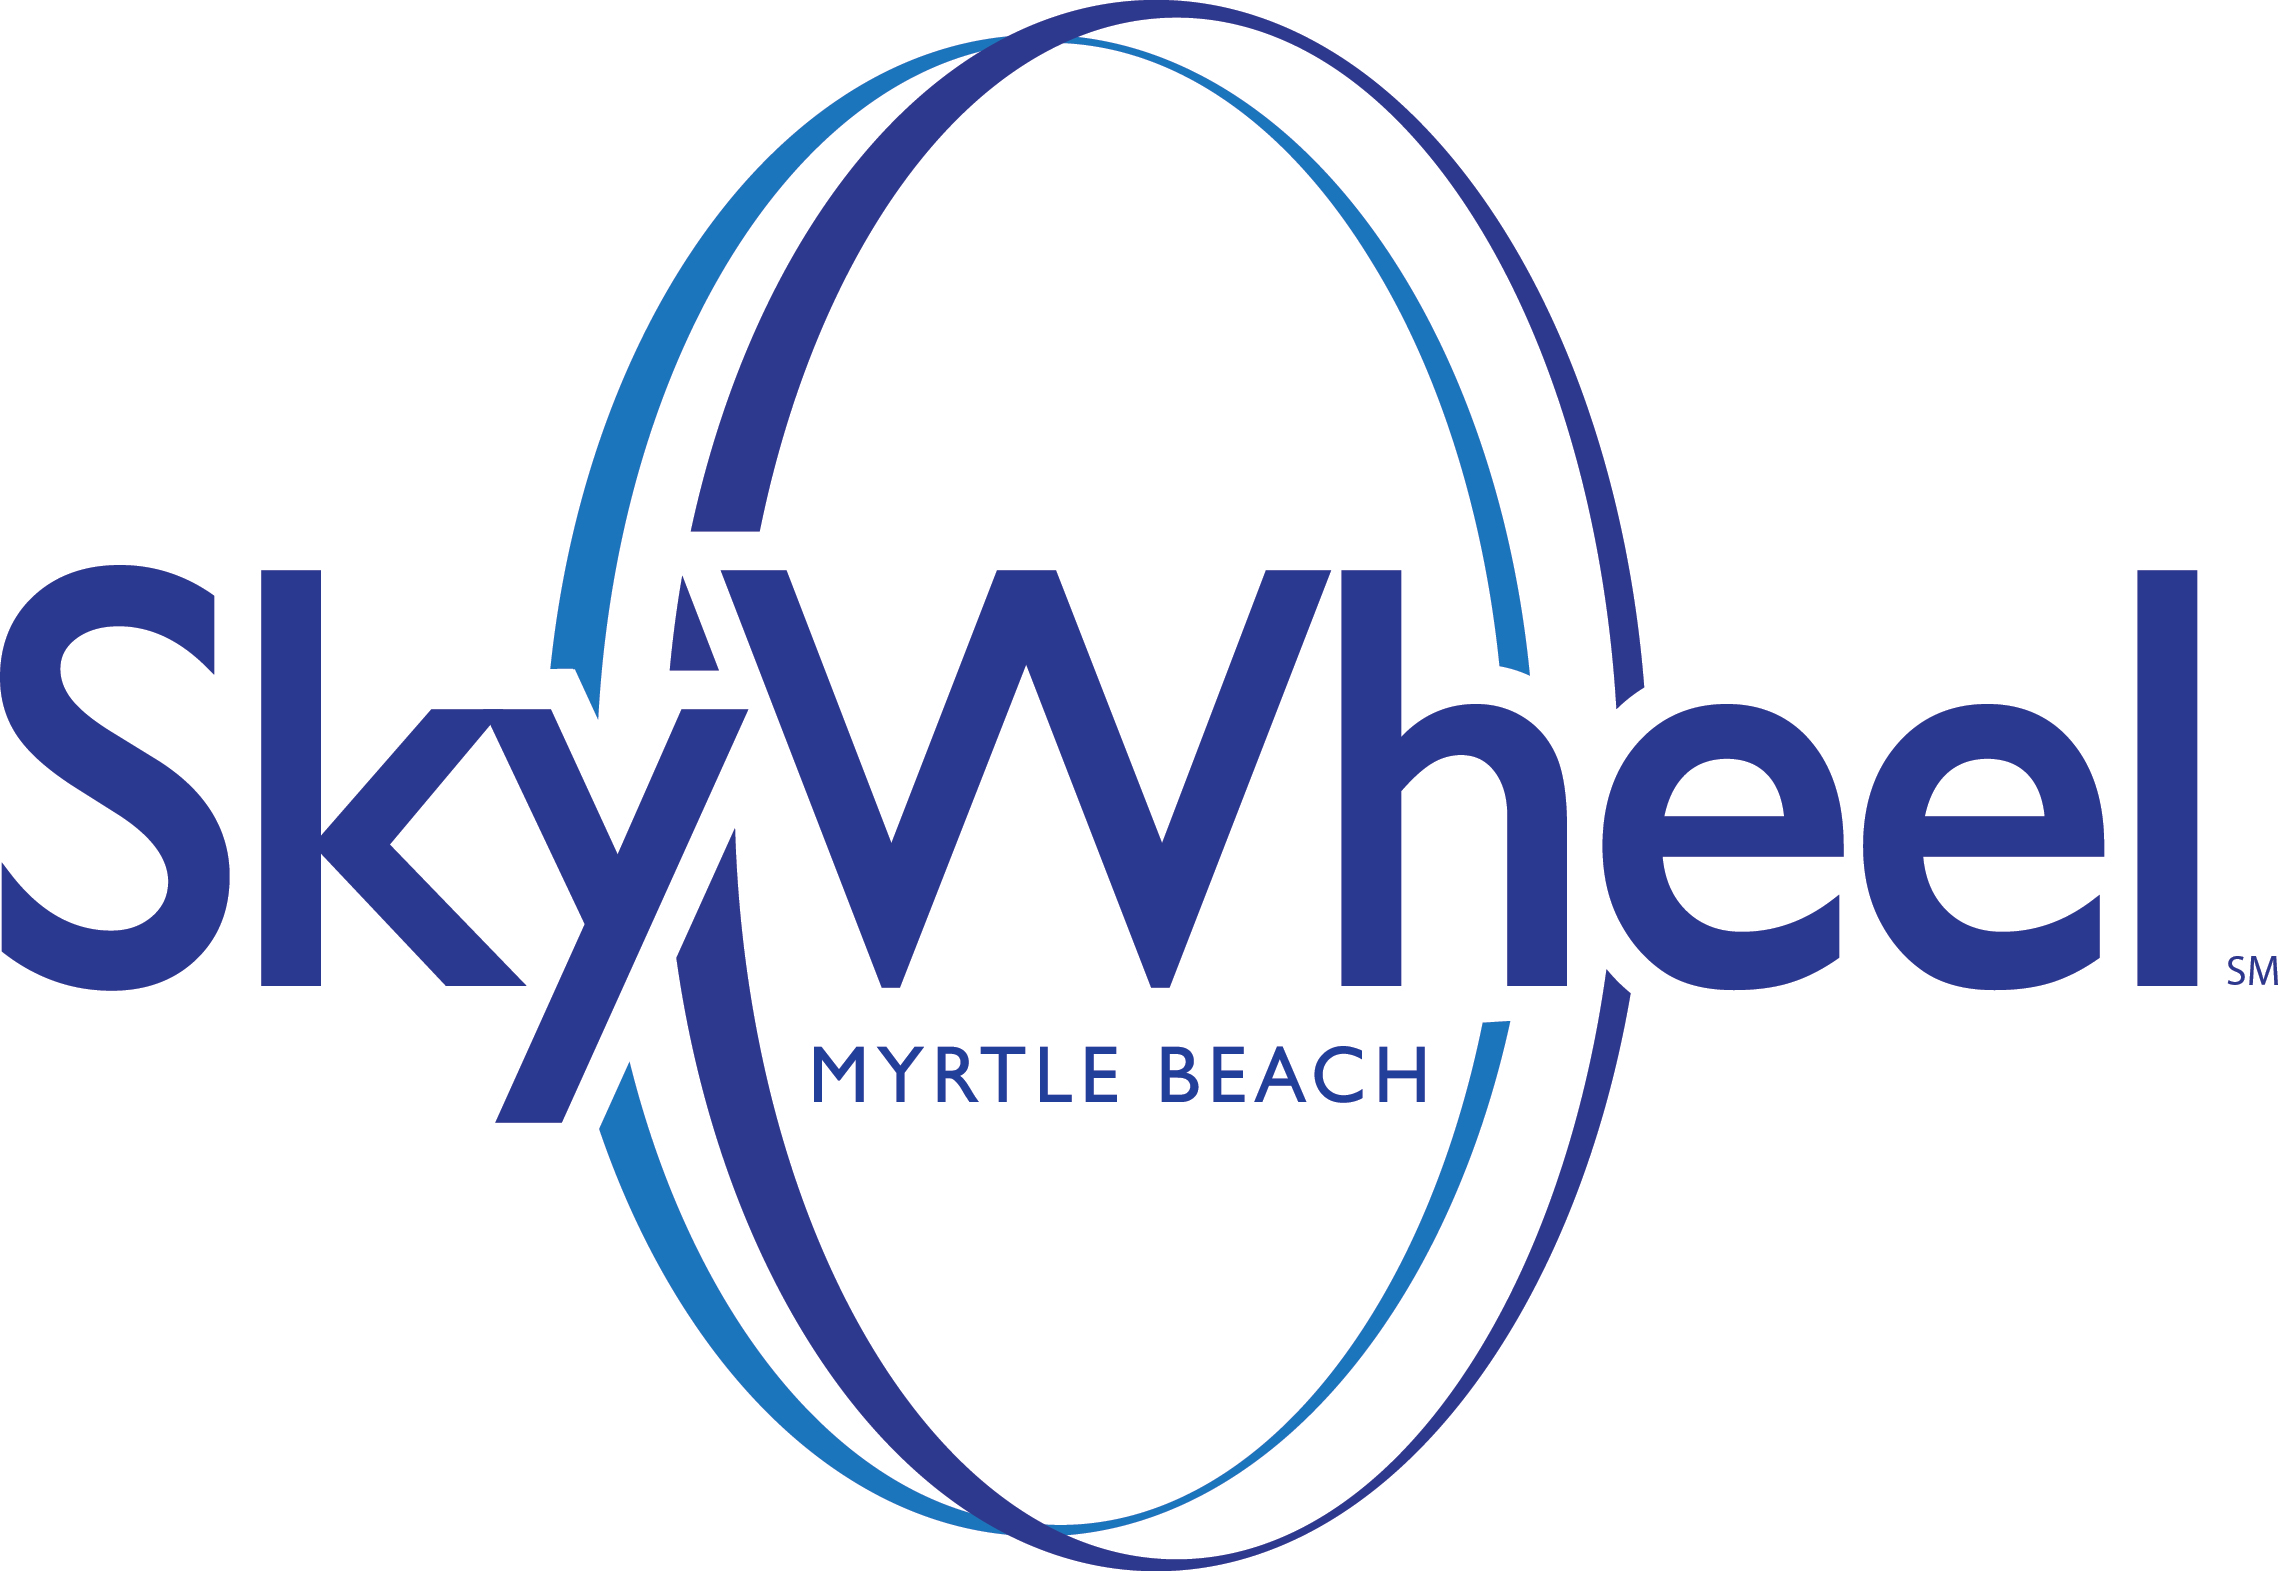 Sky Wheel Logo